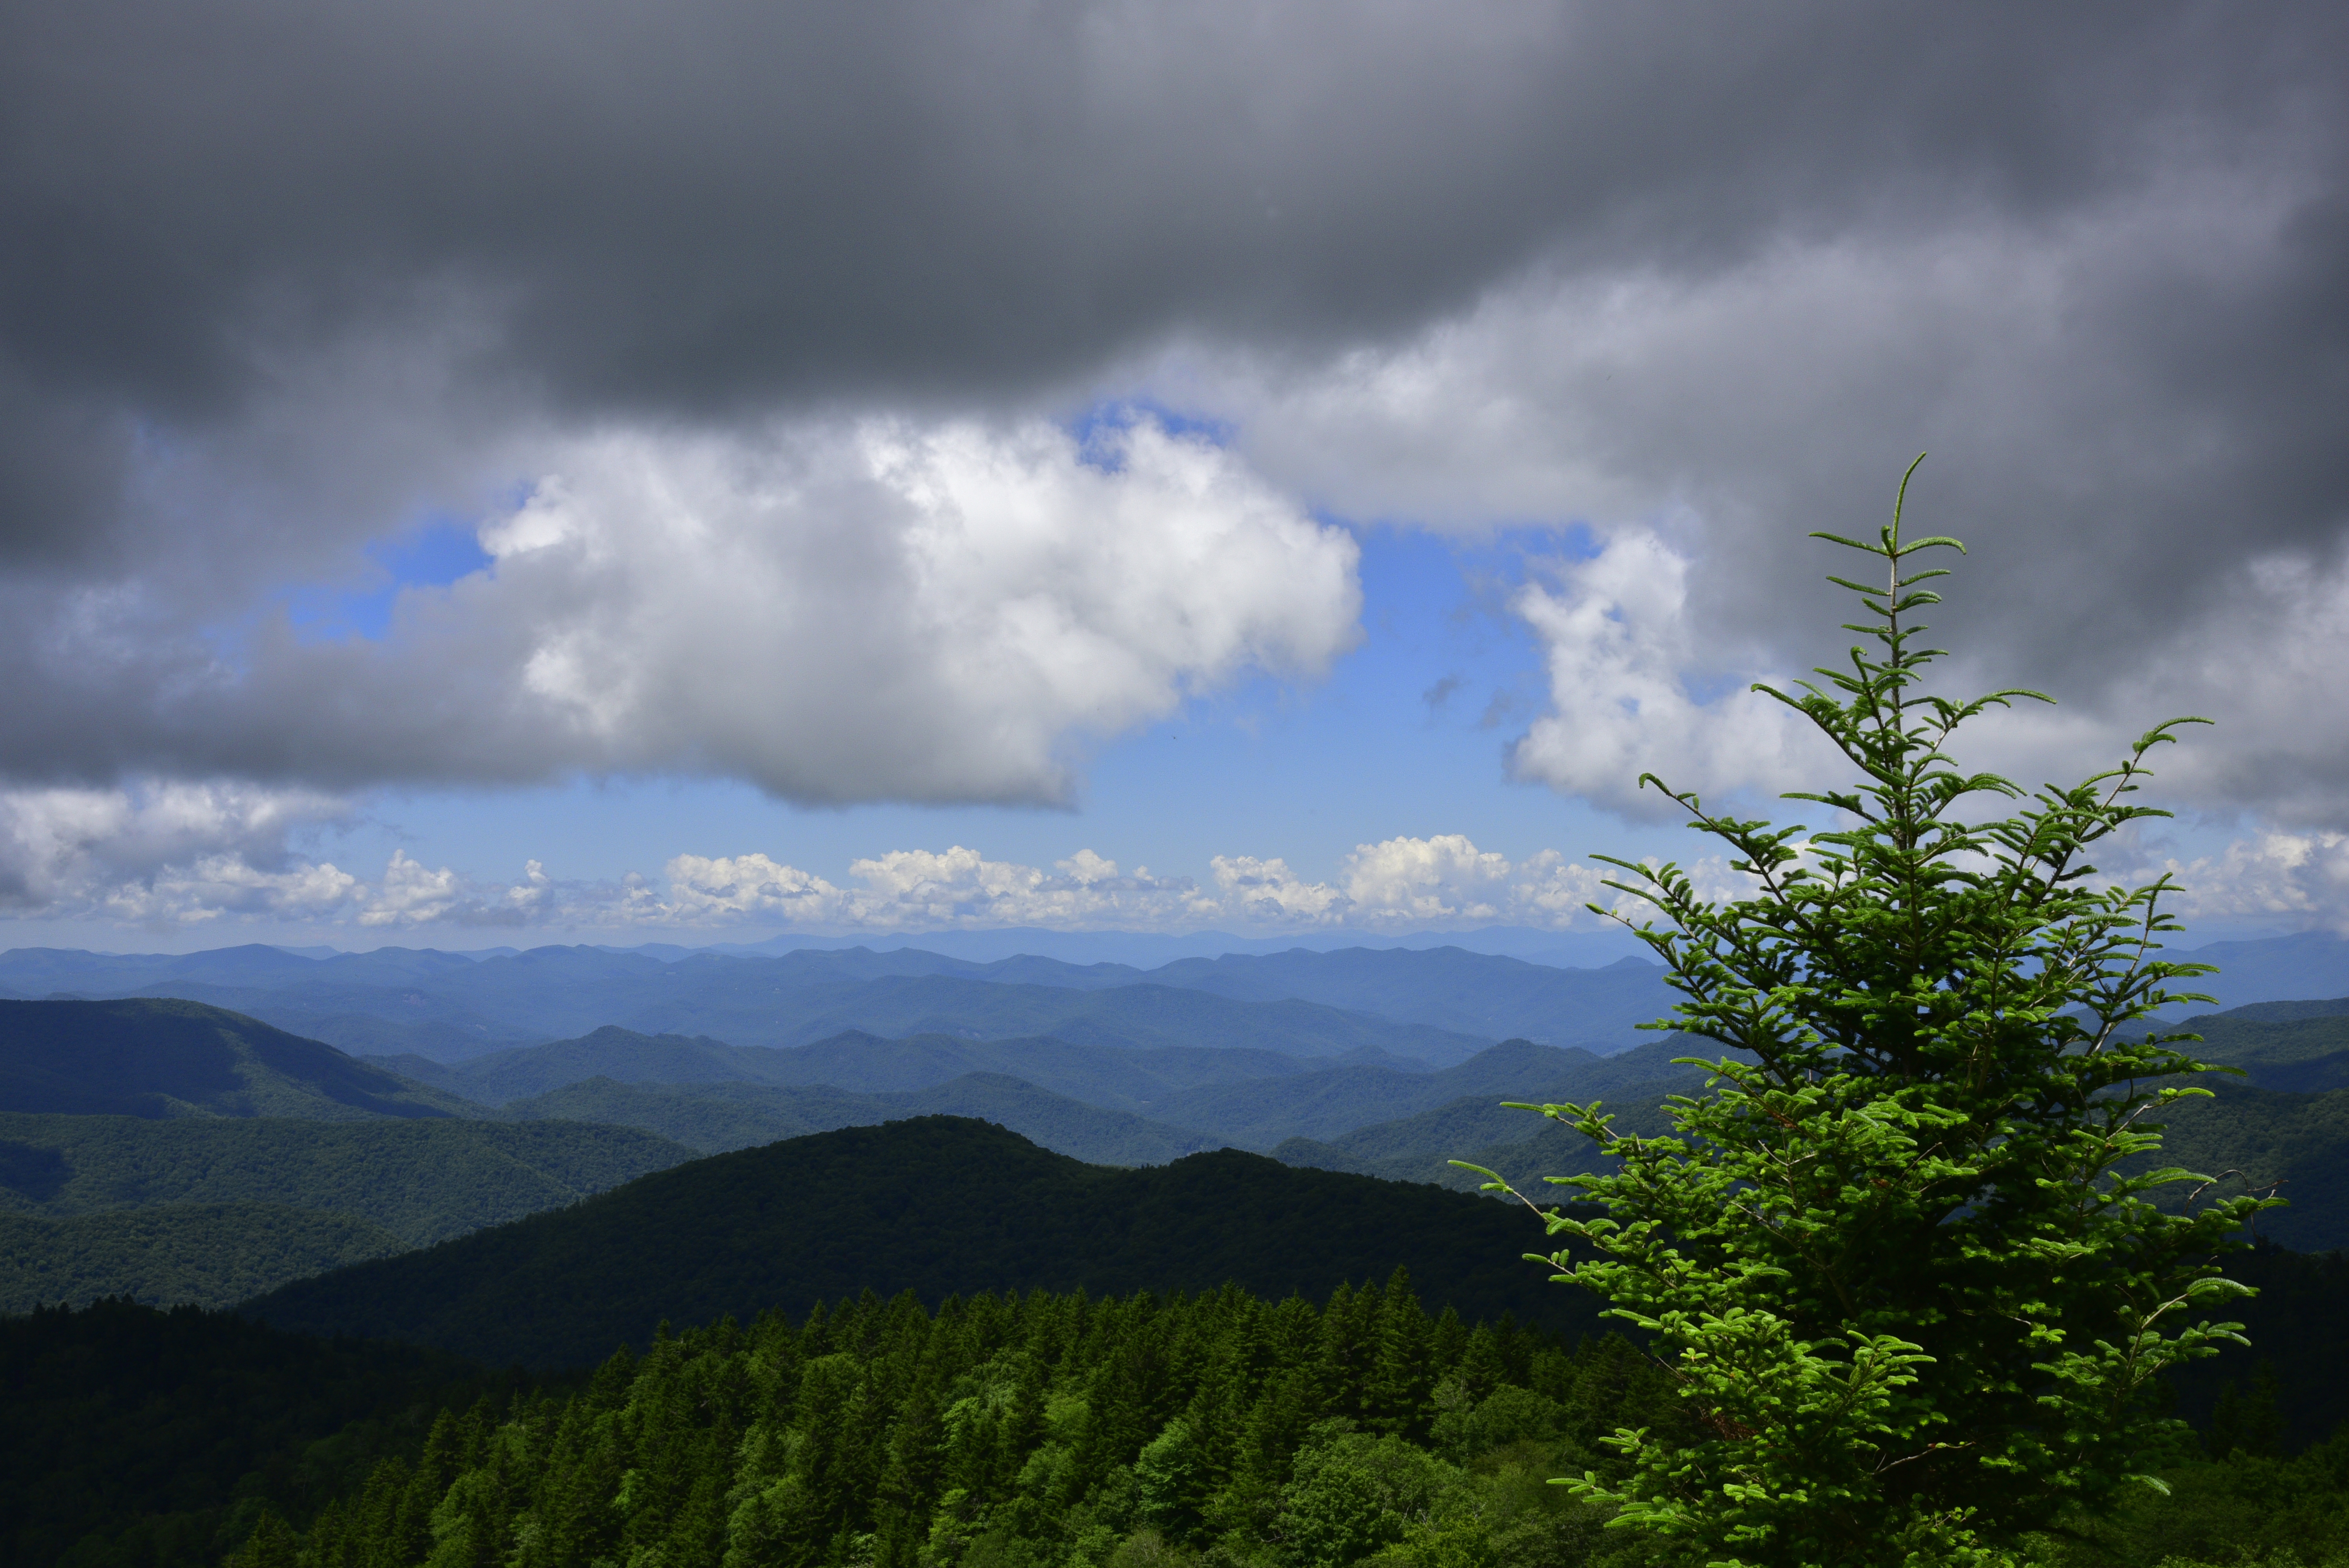 Clouds and mountain ridges  -  Cowee Mountain Overlook, Blue Ridge Parkway, North Carolina